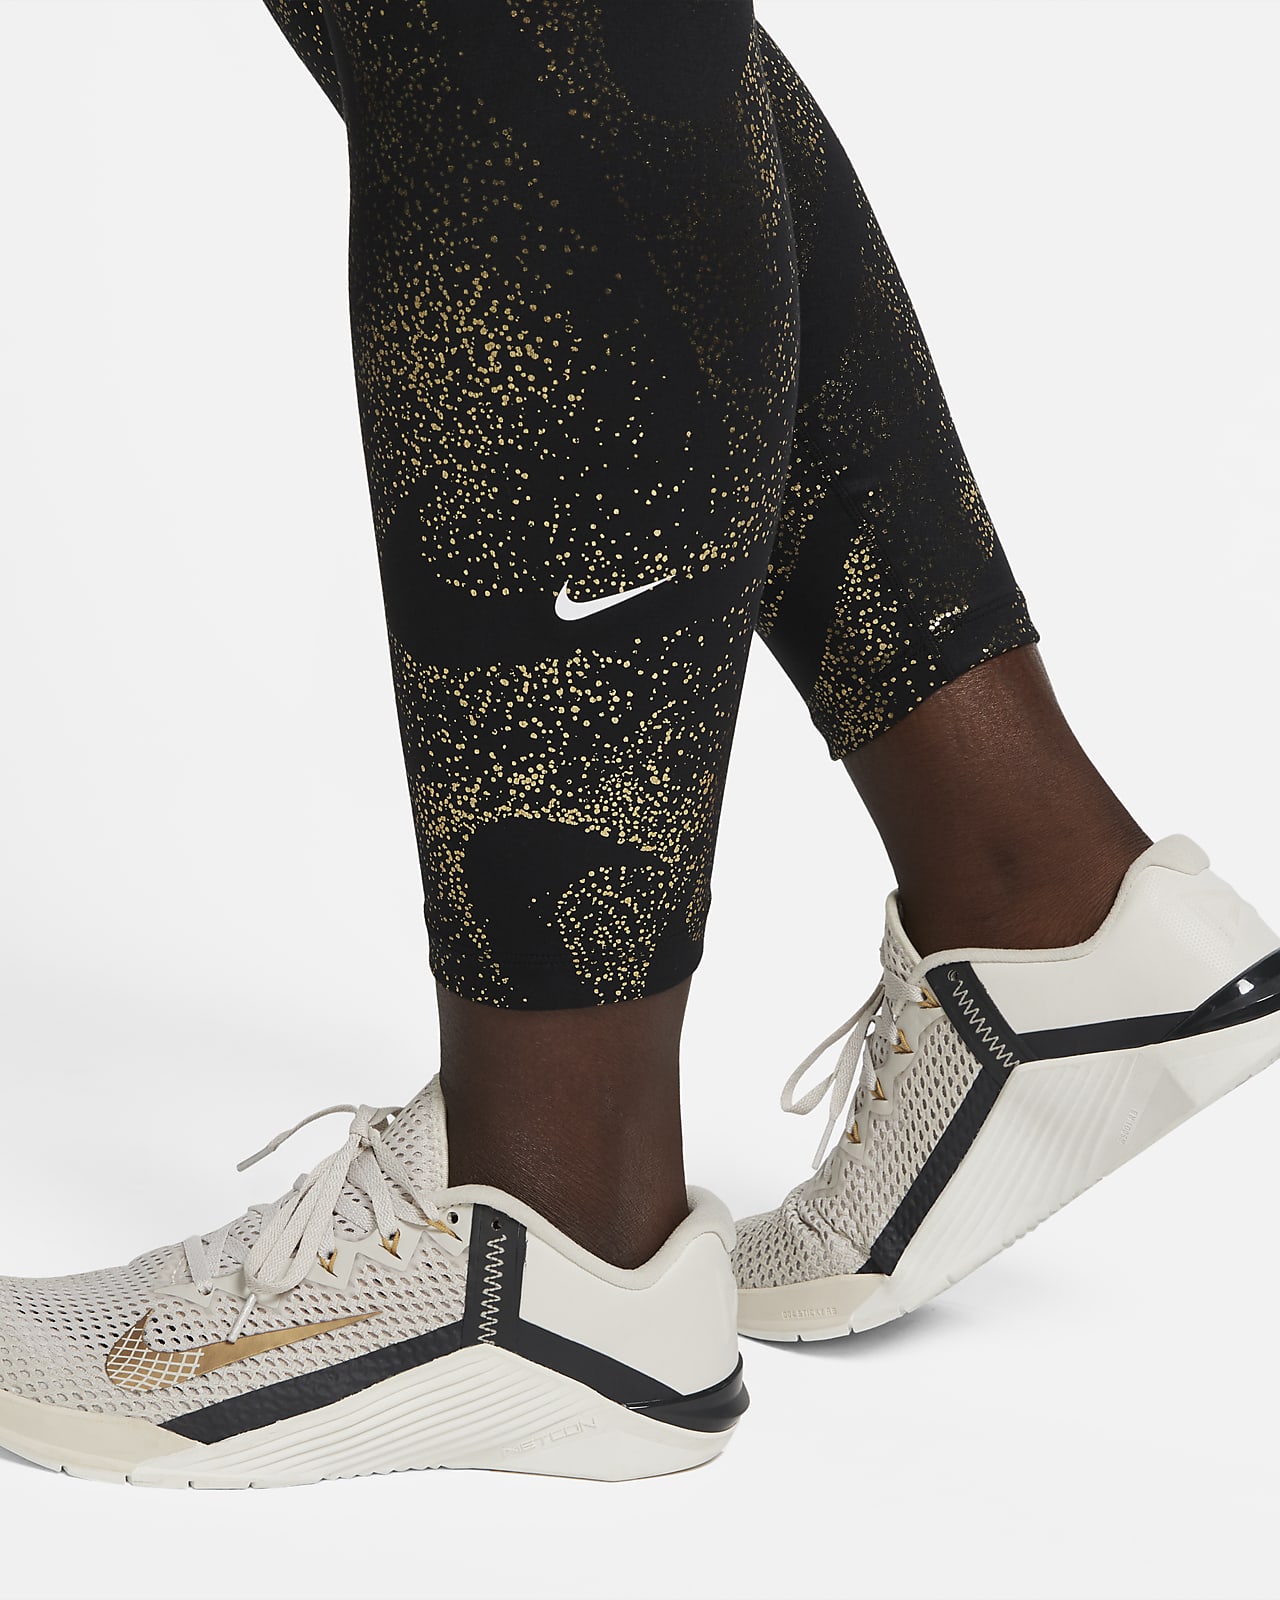 Nike One Women's Dark Grey Camo Print Midrise Leggings (DD4559-070) S/M/L/XL /XXL